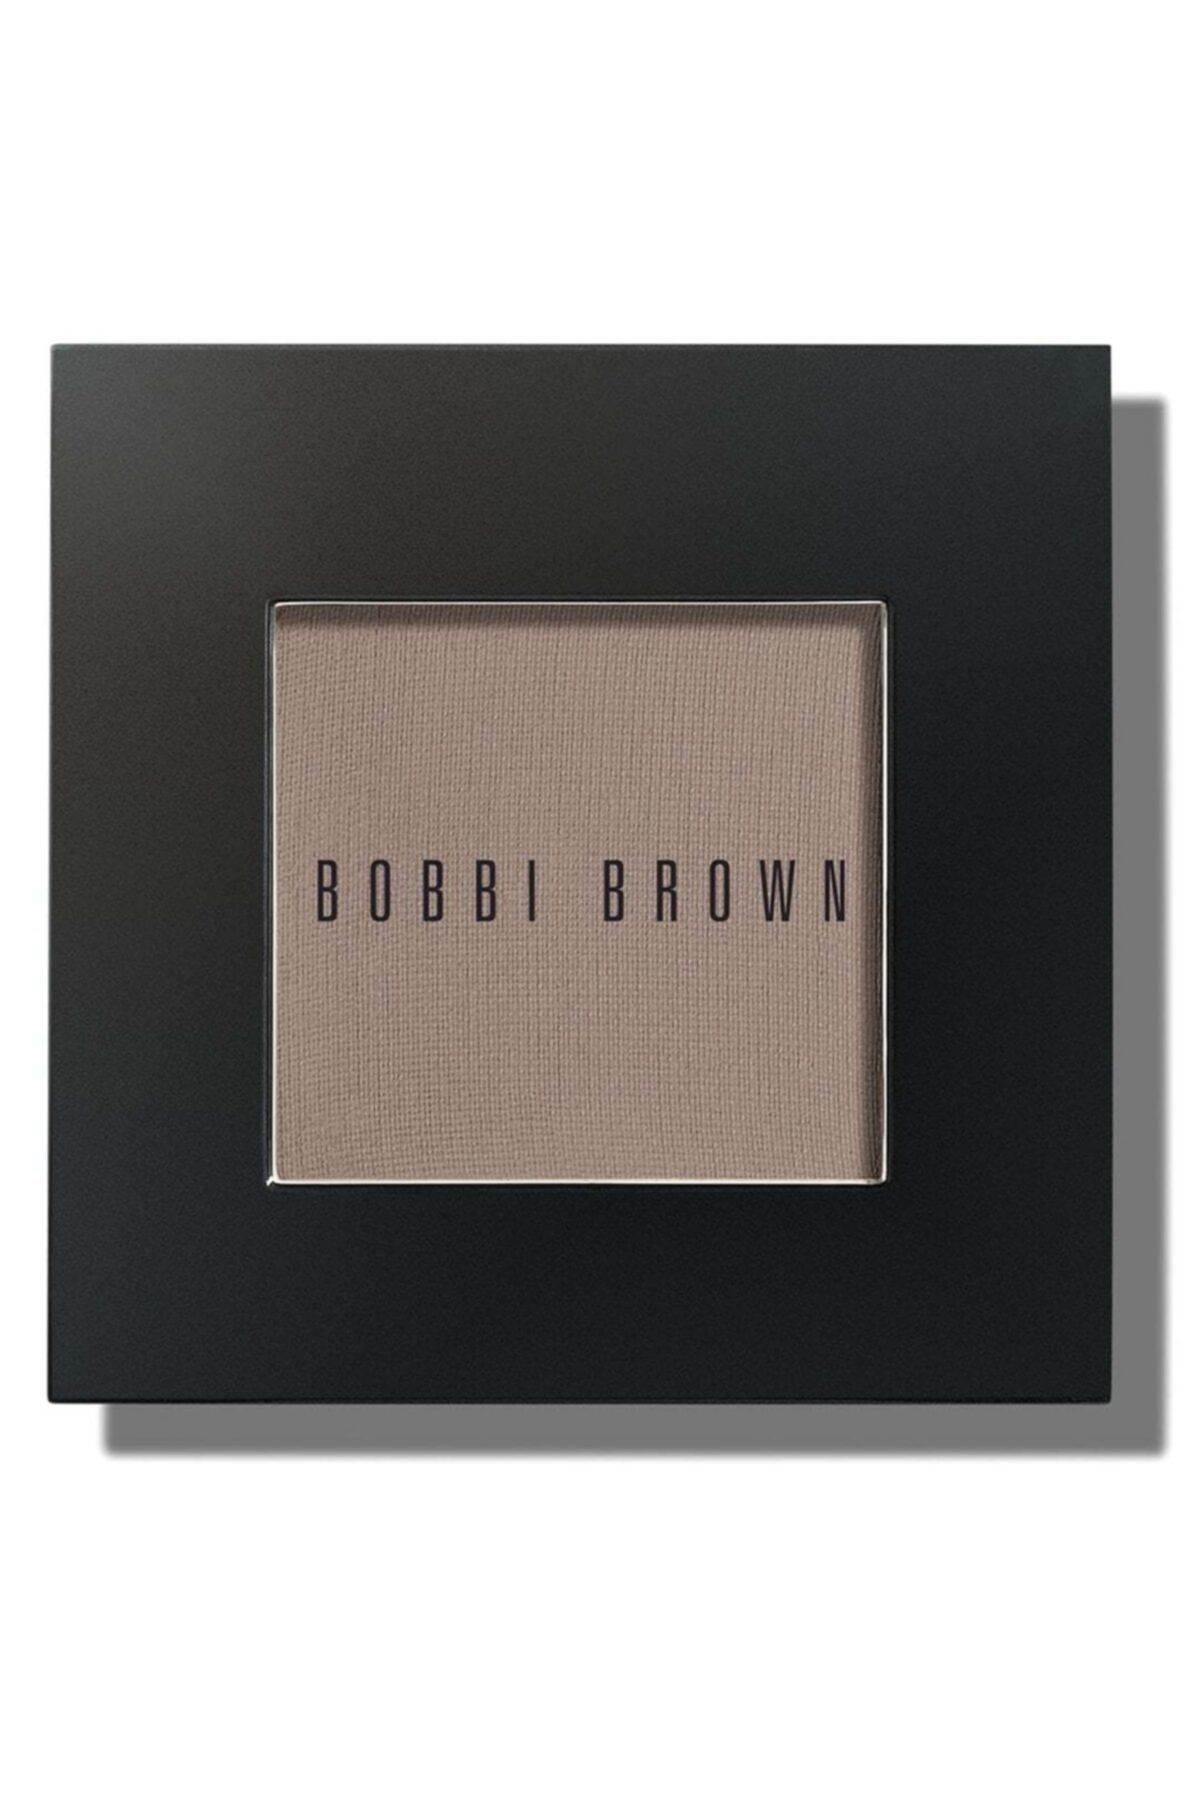 Bobbi Brown Eye Shadow / Göz Farı 2.5 G Slate (16) 716170058658